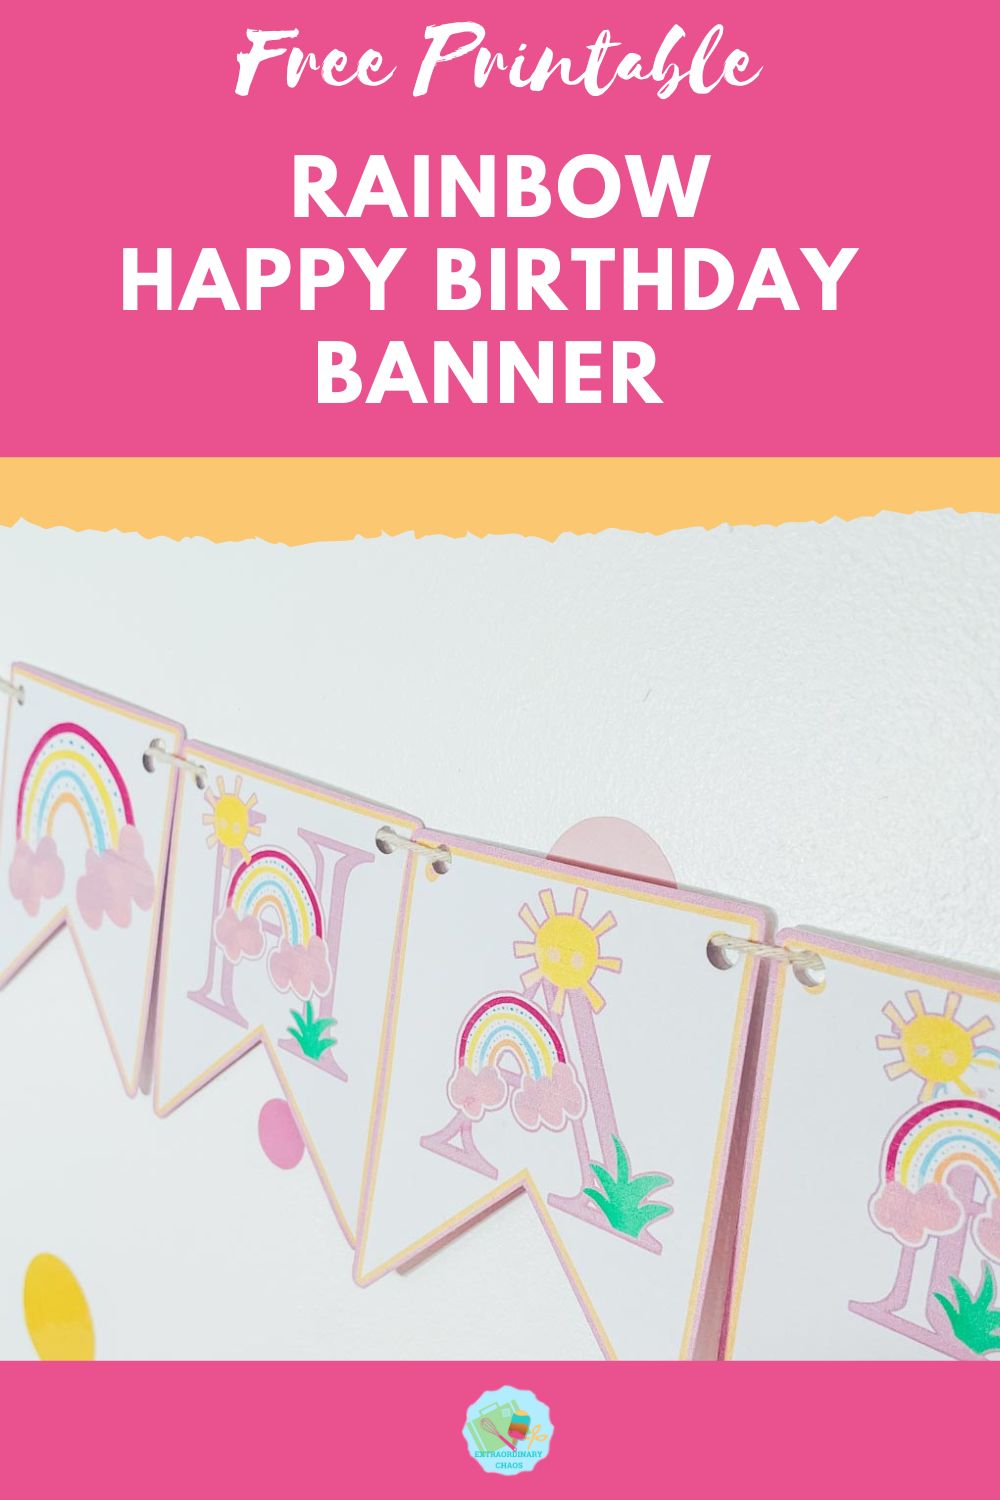 Free printable Rainbow Happy Birthday Banner